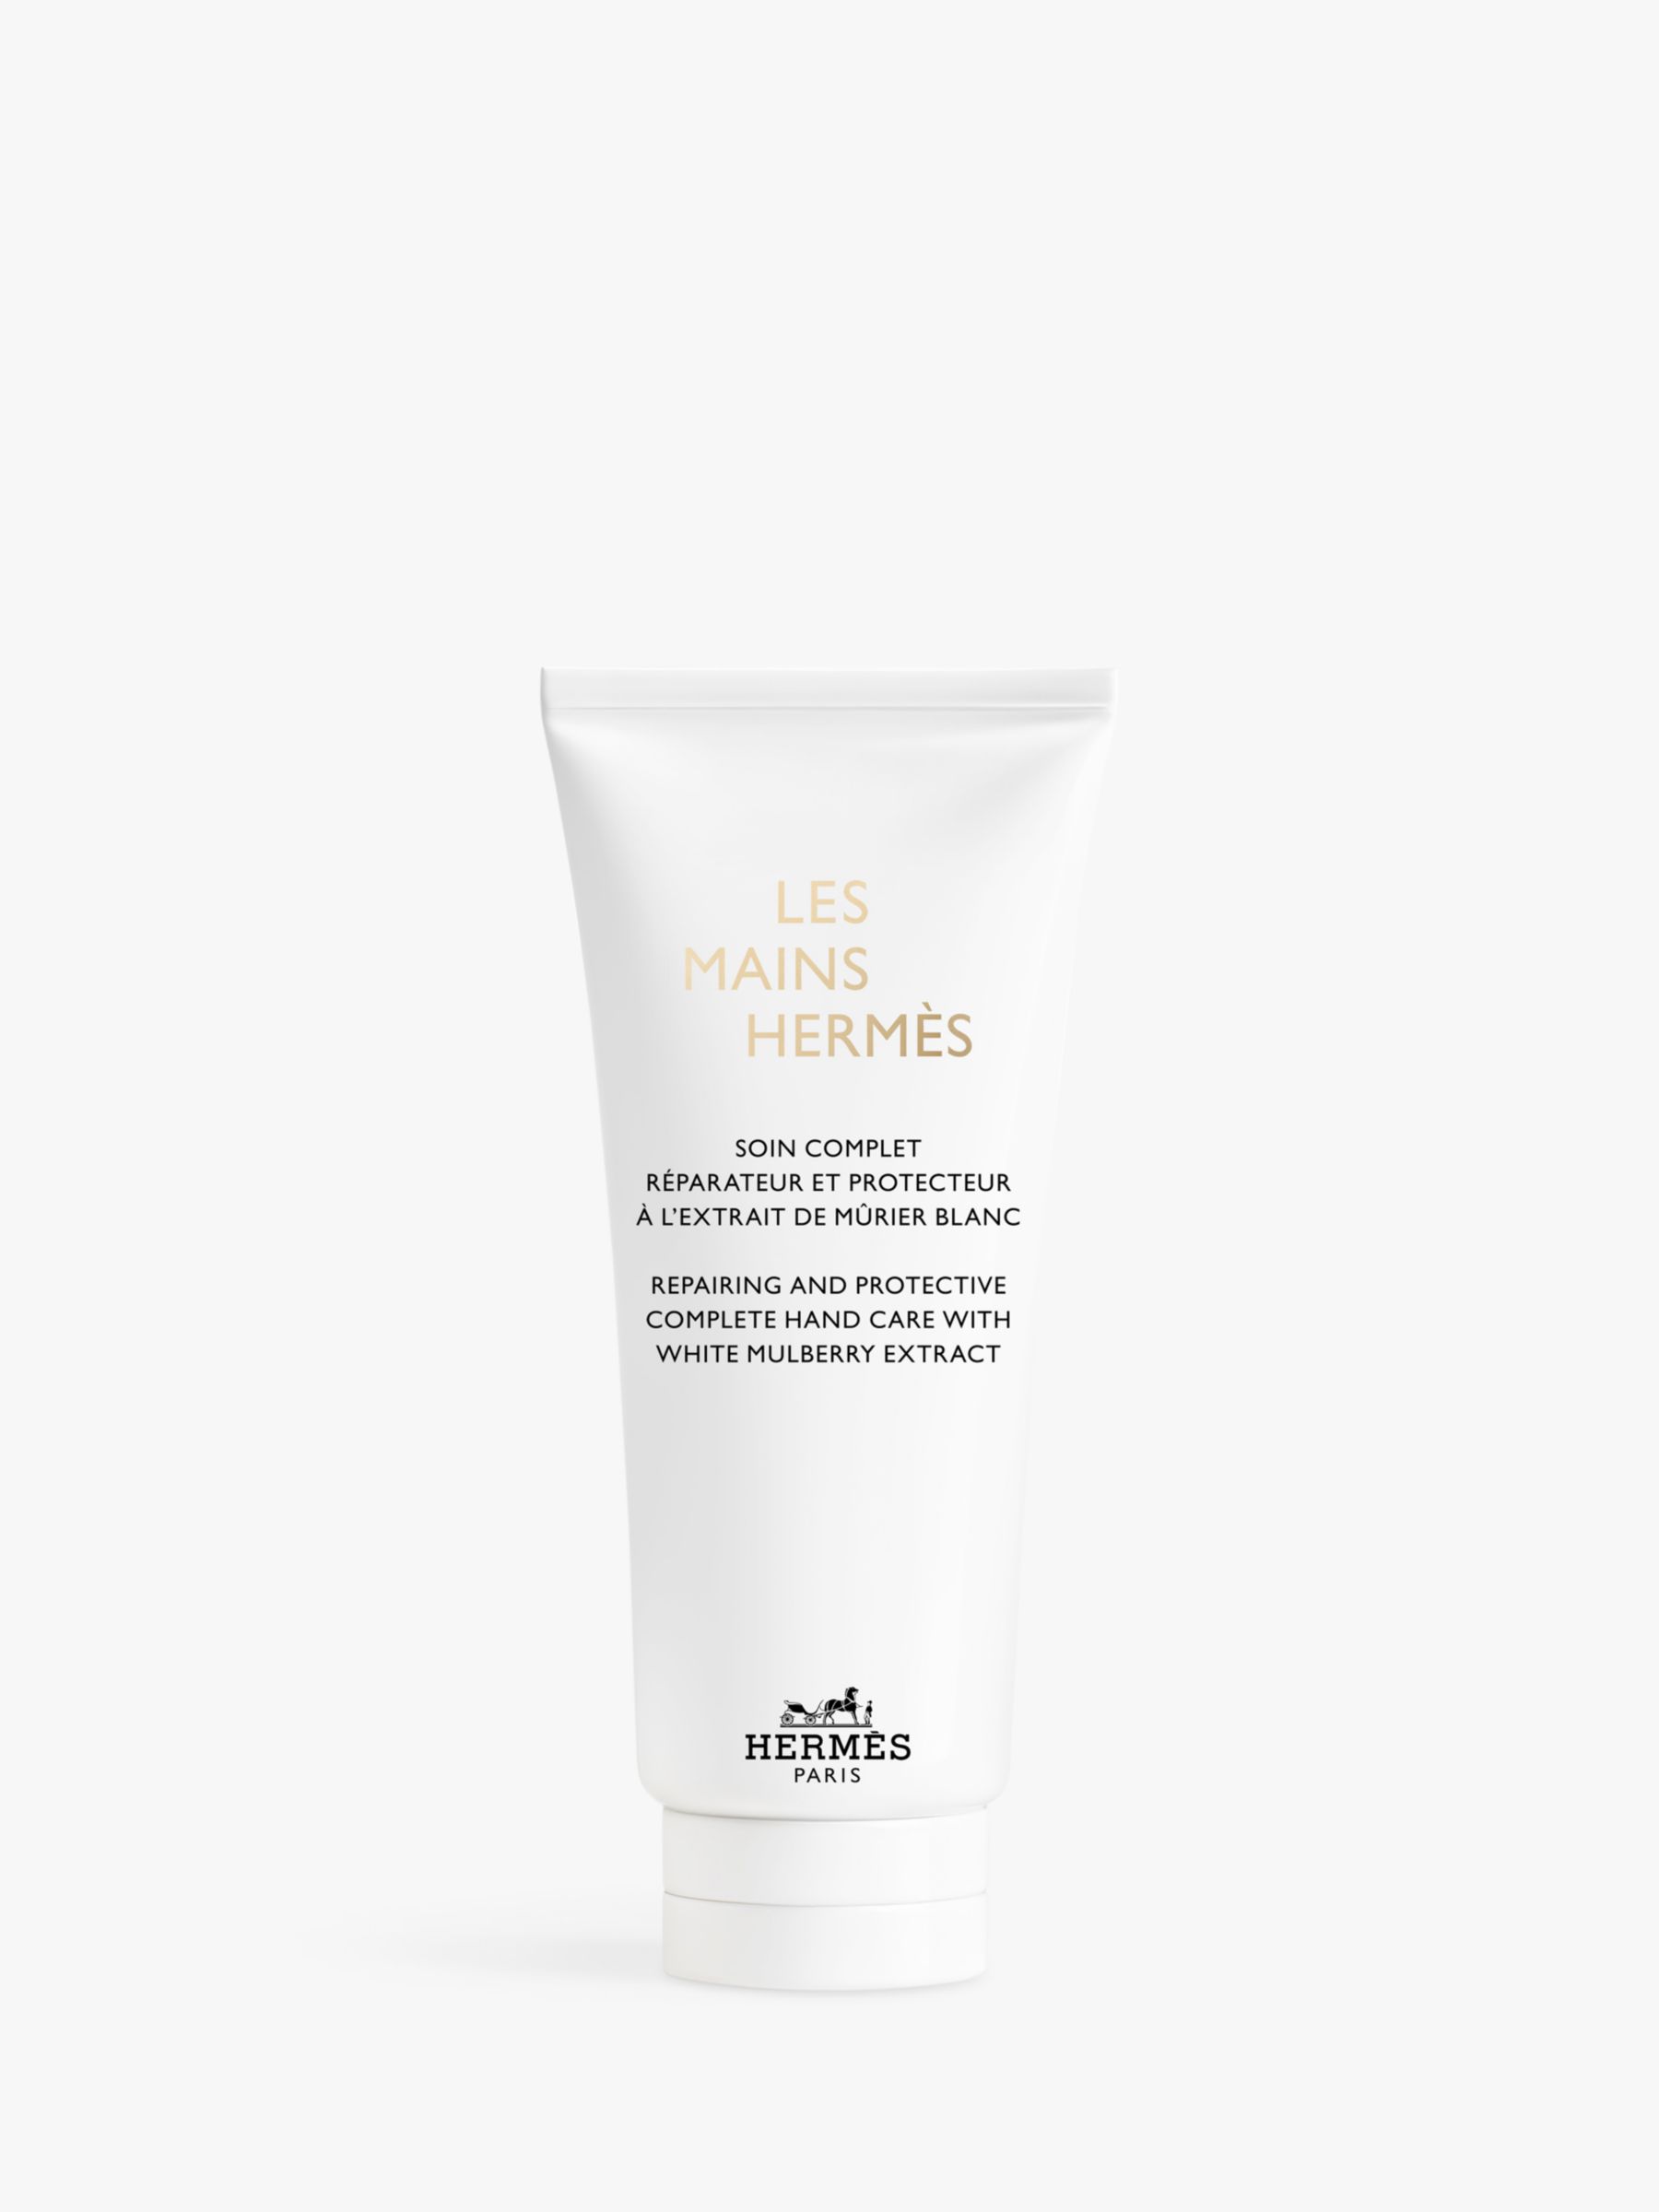 Hermès Les Mains Complete Hand Care Cream, 100ml 1